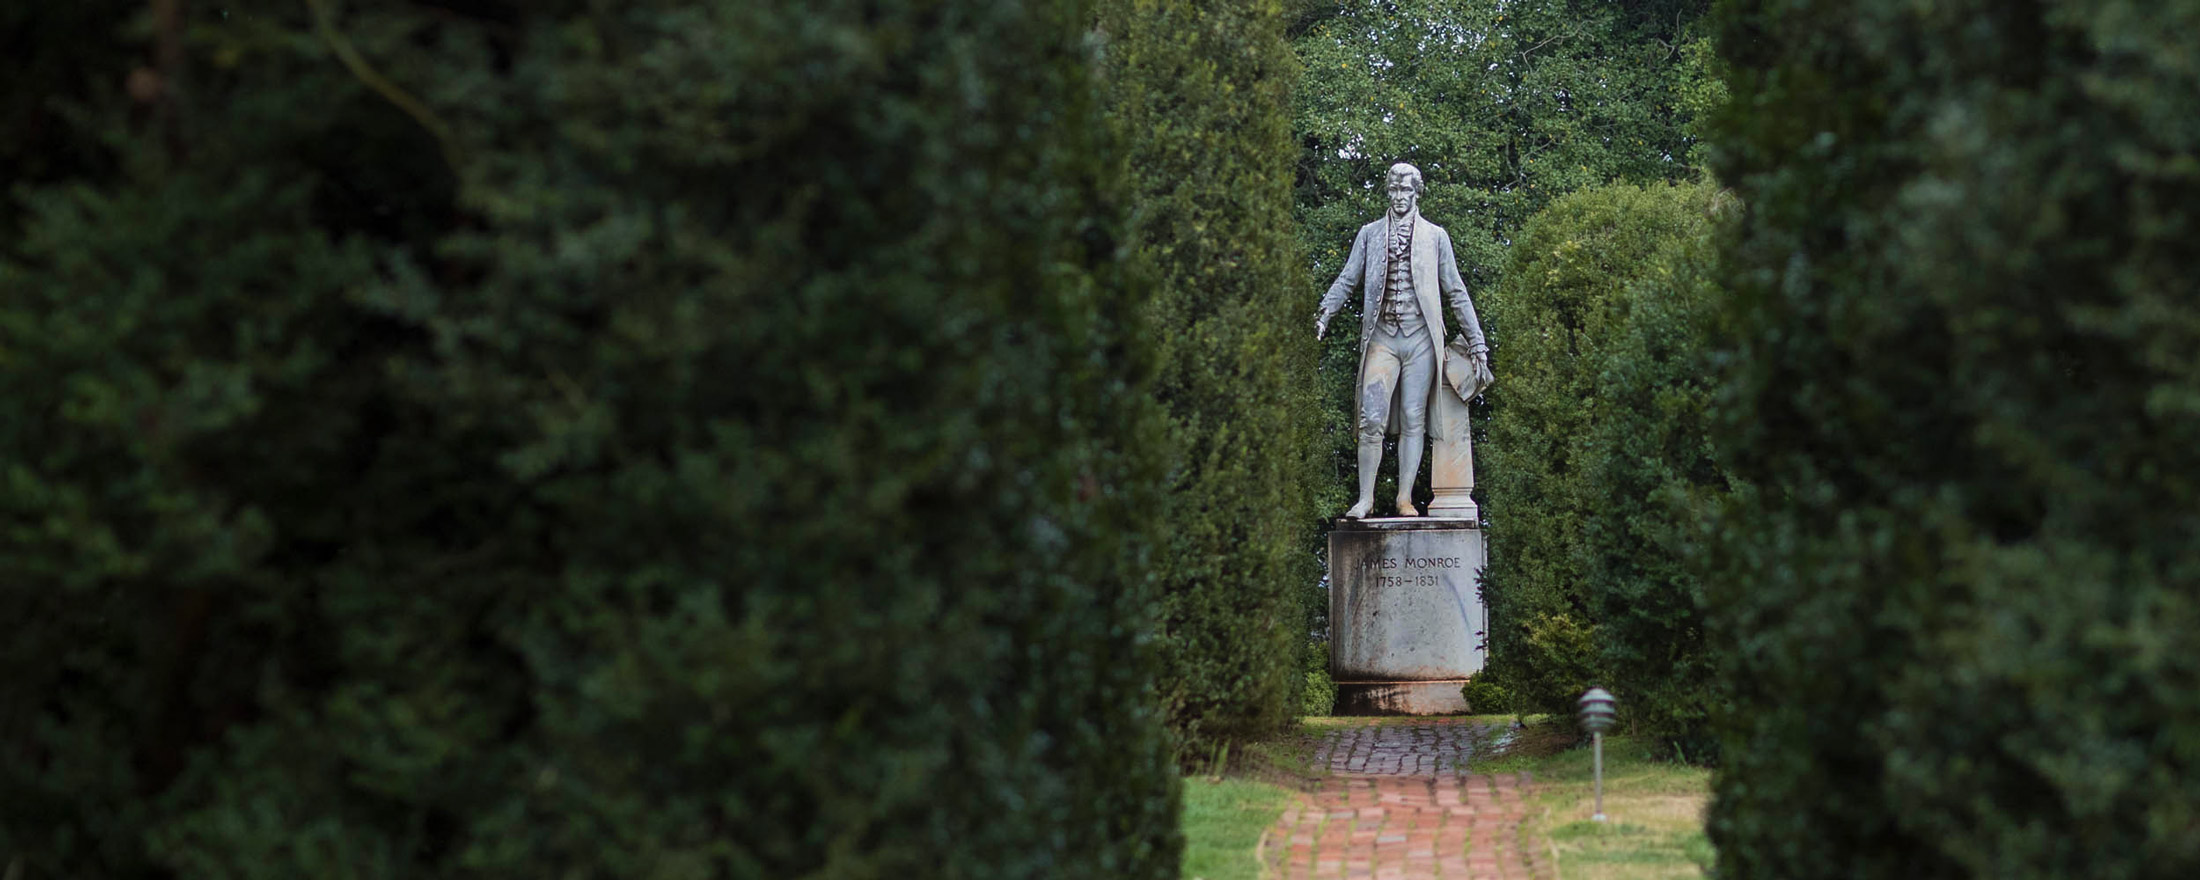 James Monroe statue in the garden of Highland